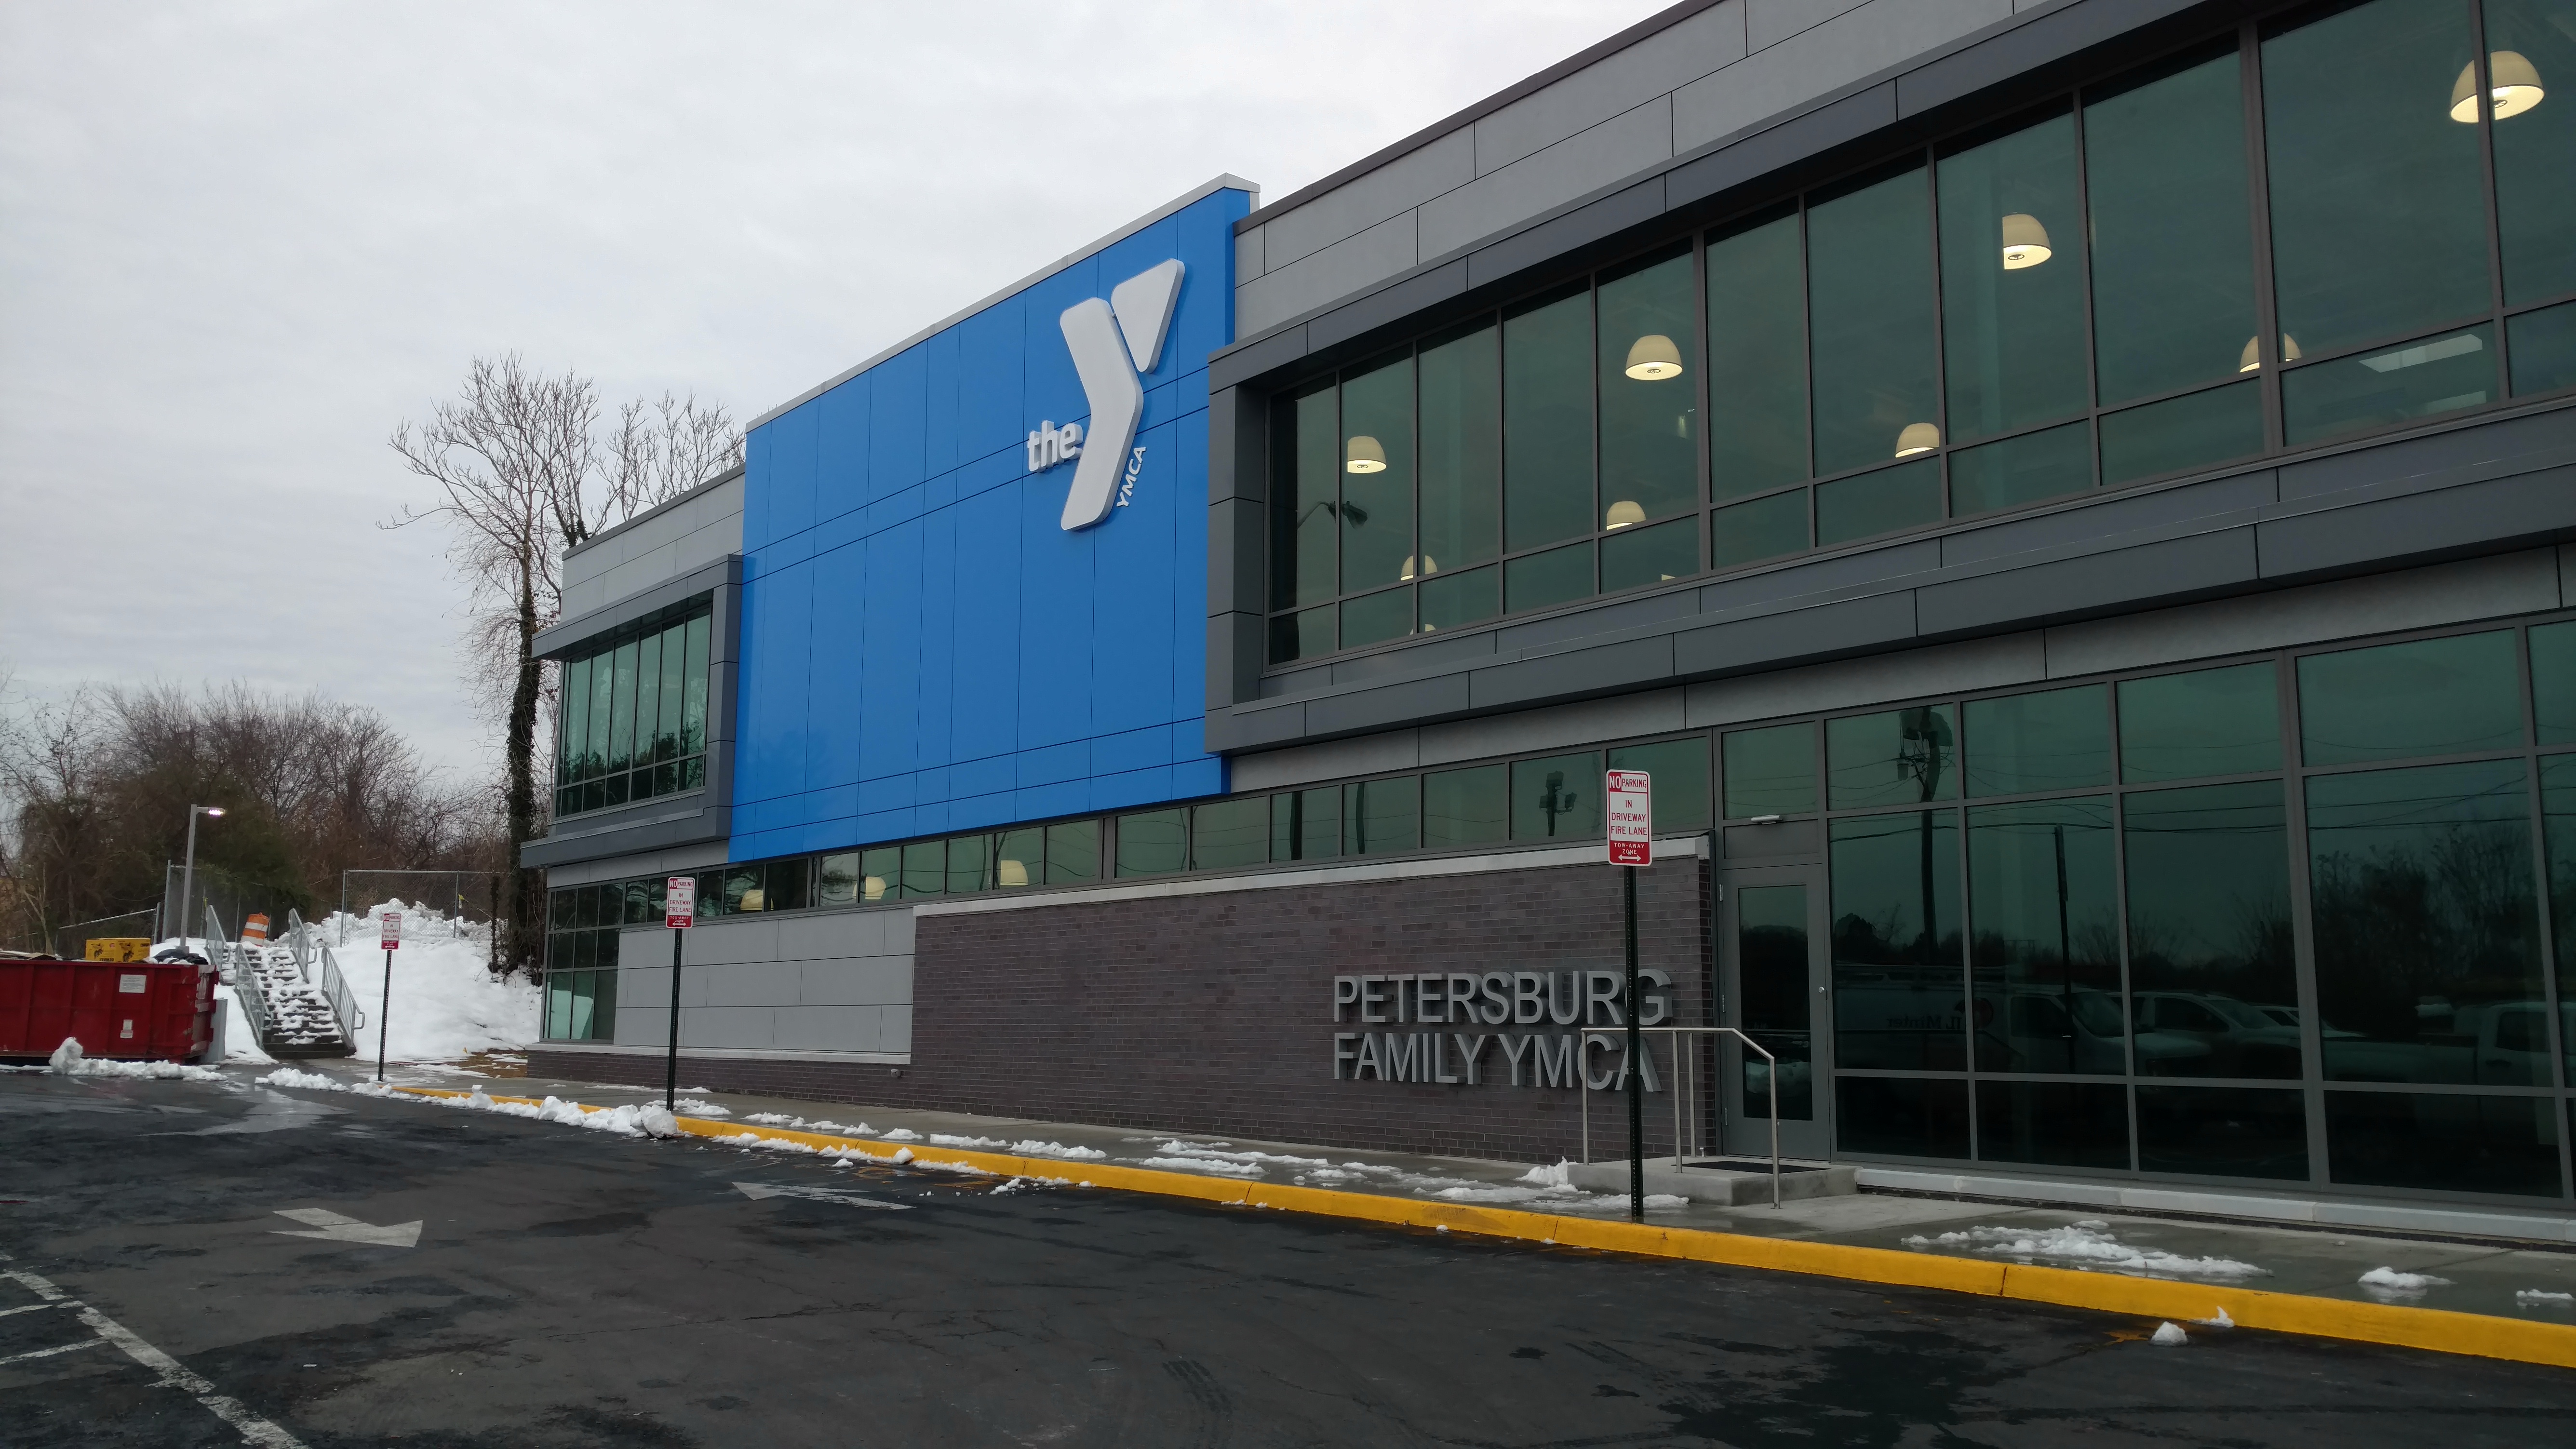 Cladding Corp - Petersburg YMCA - Swisspearl Fiber Cement Rainscreen